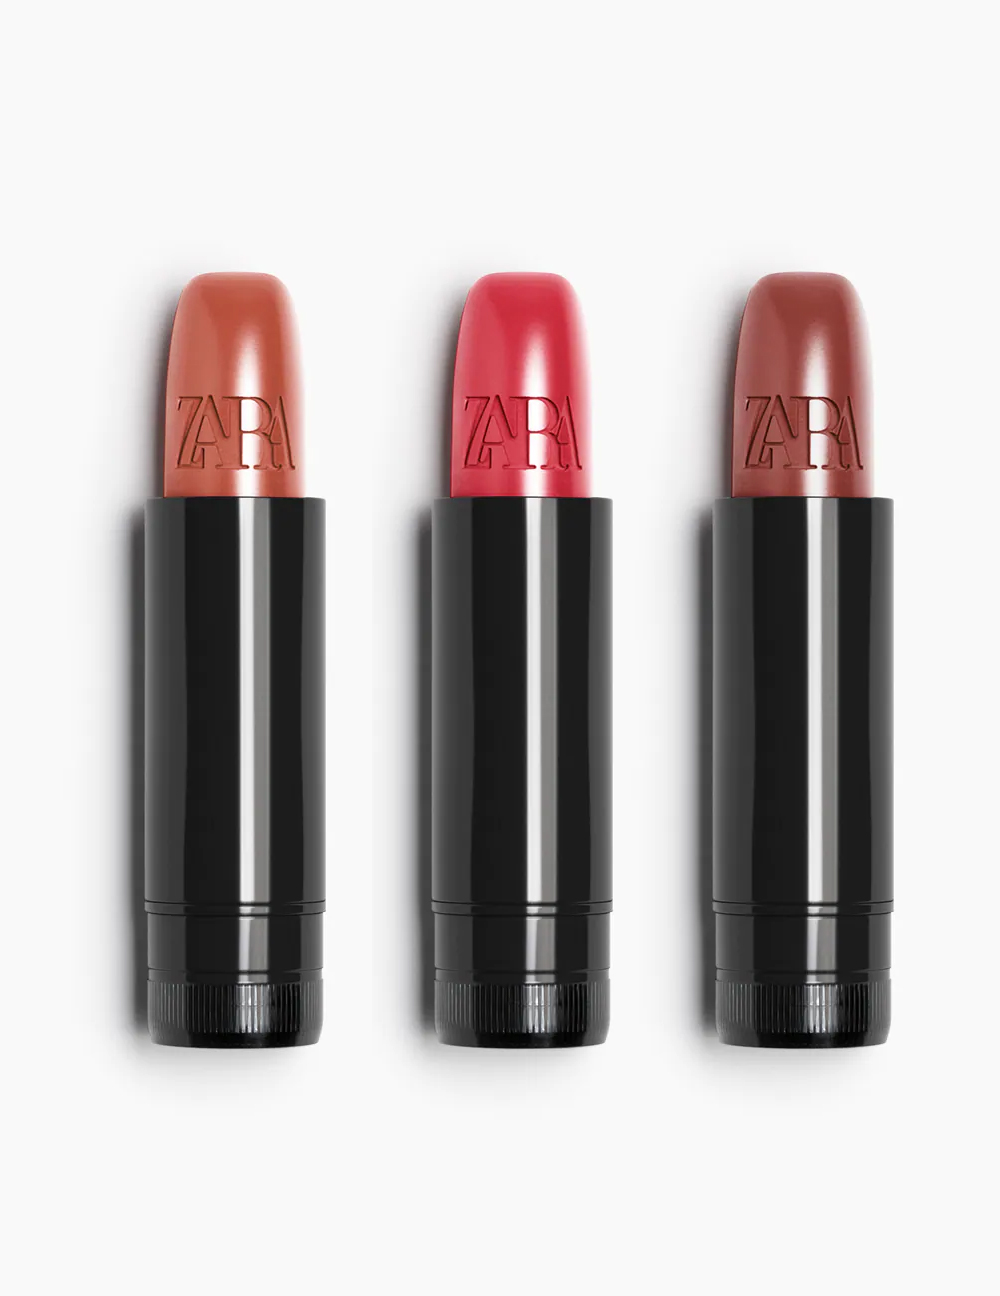 Zara Cult Satin Lipsticks